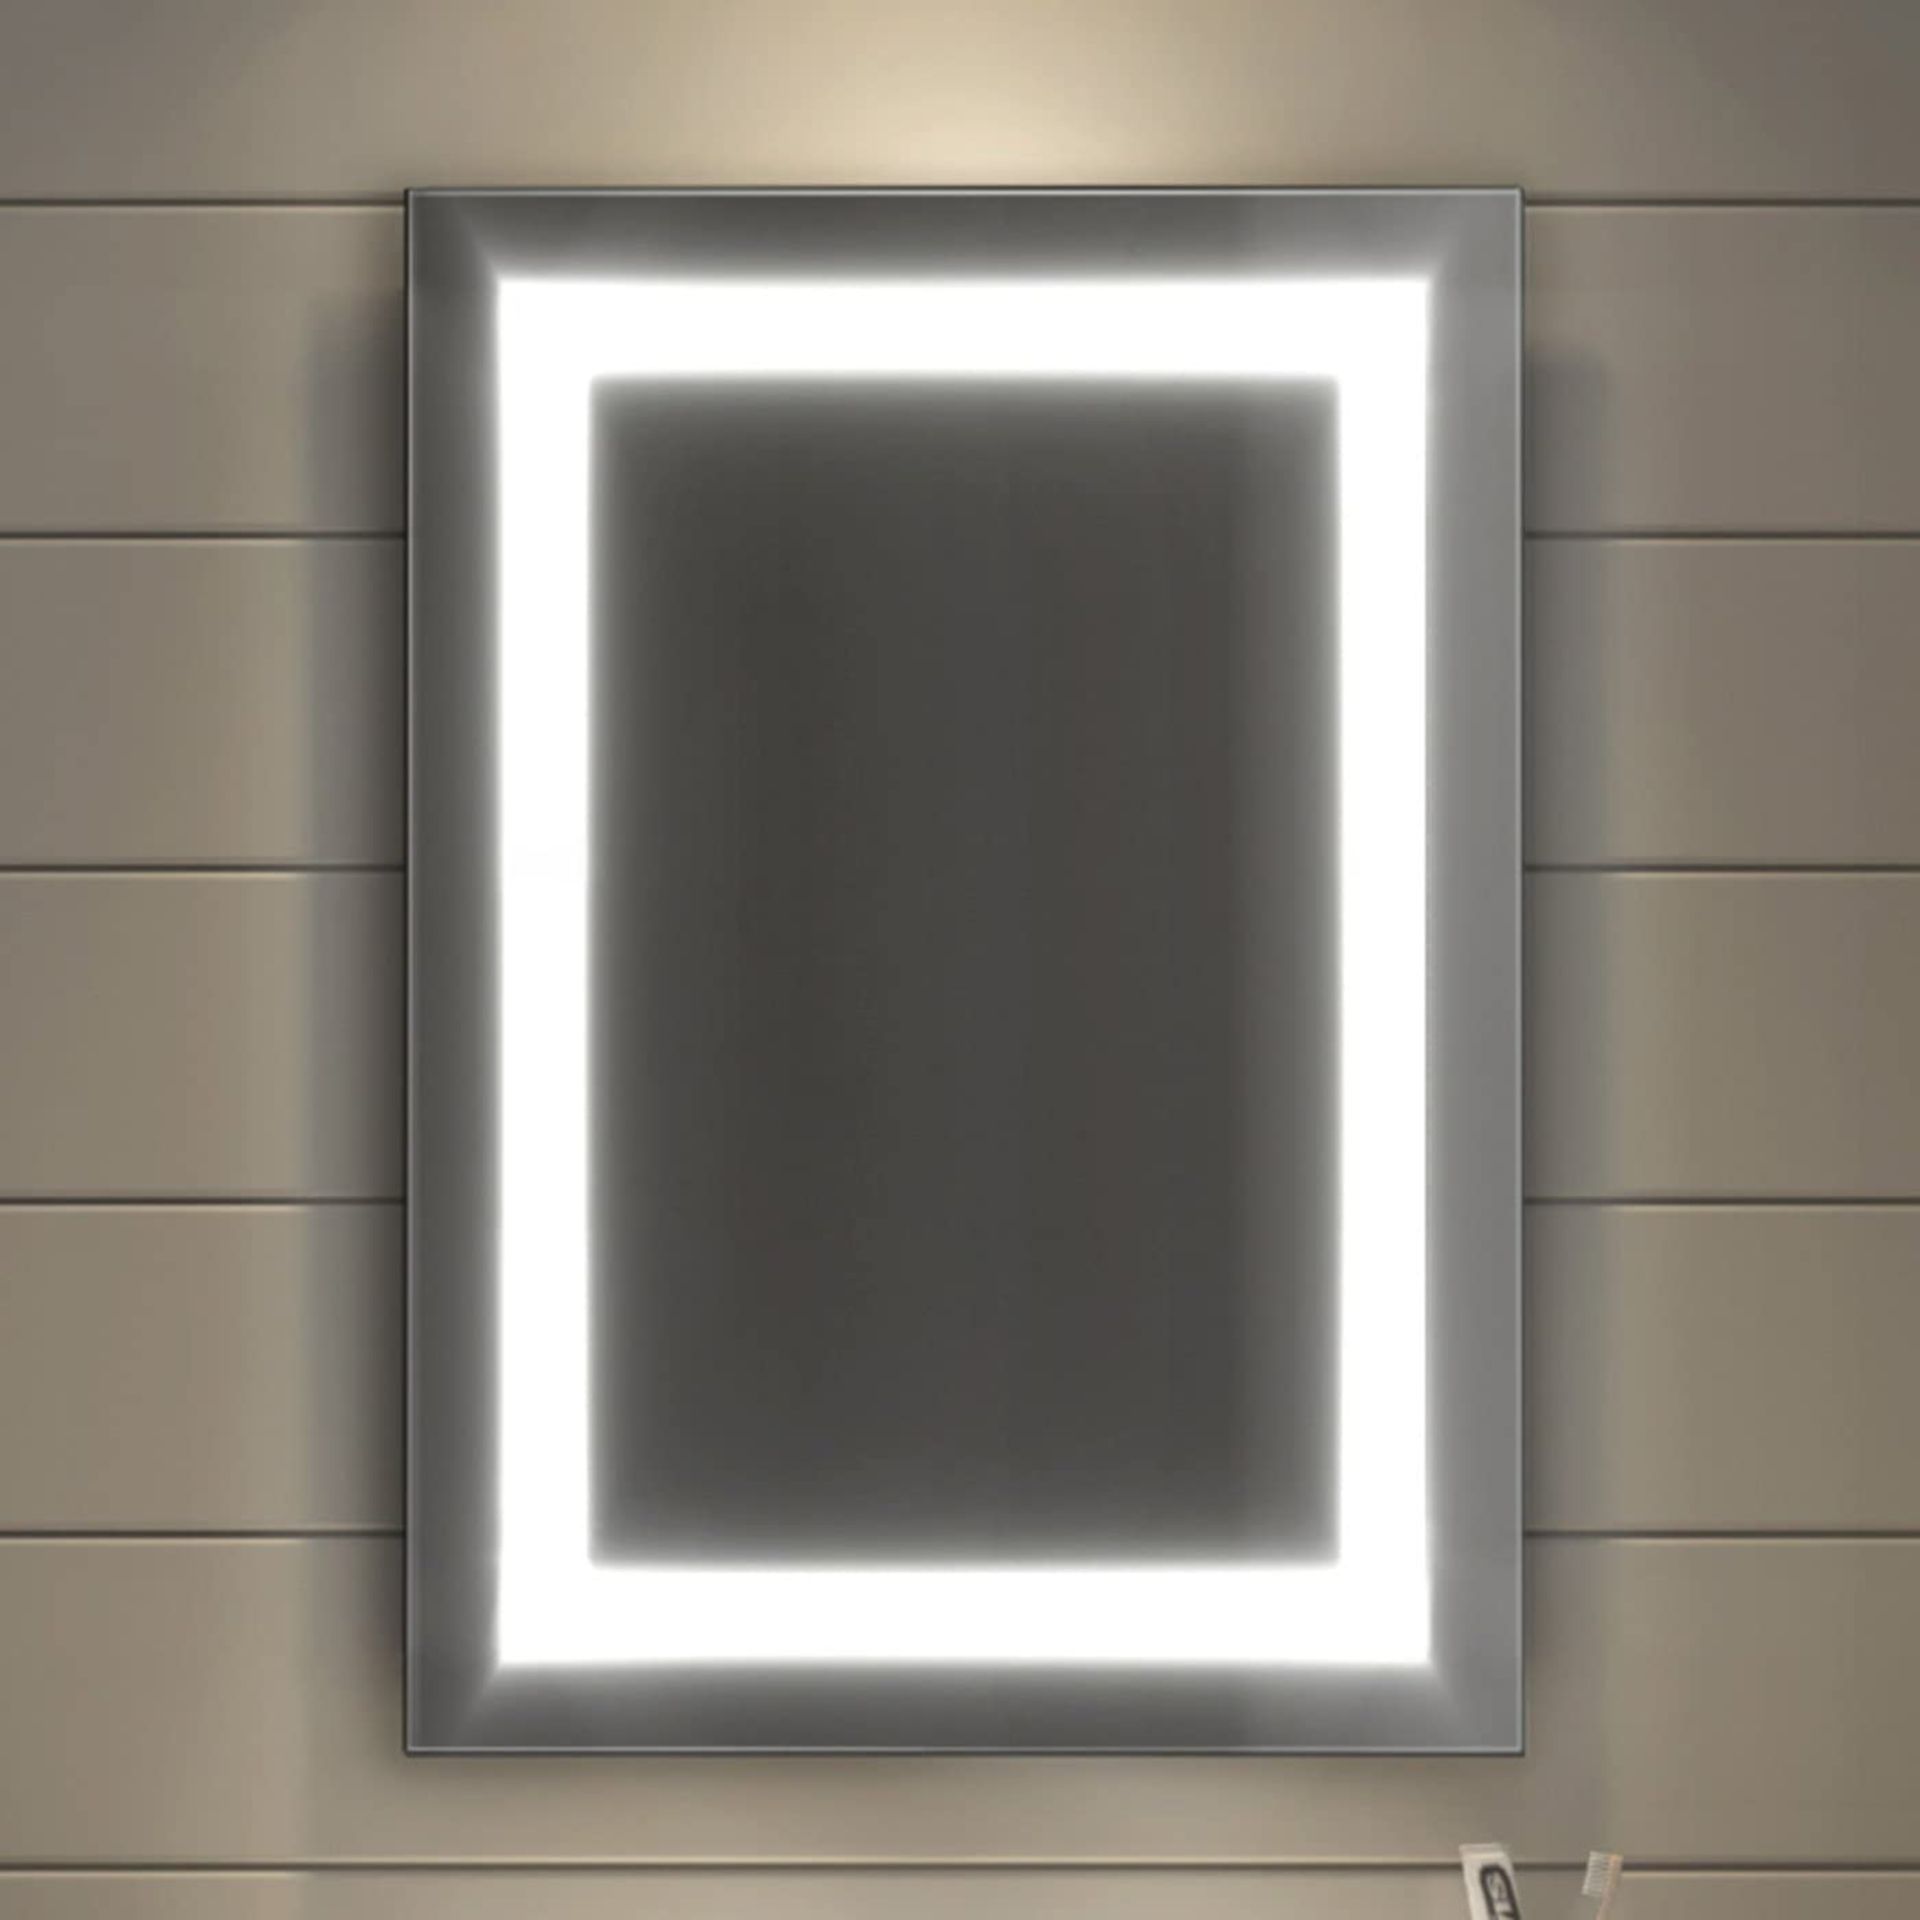 New & Boxed 500x700mm Modern Illuminated Backlit Led Light Bathroom Mirror + Demister Pad. RRP...